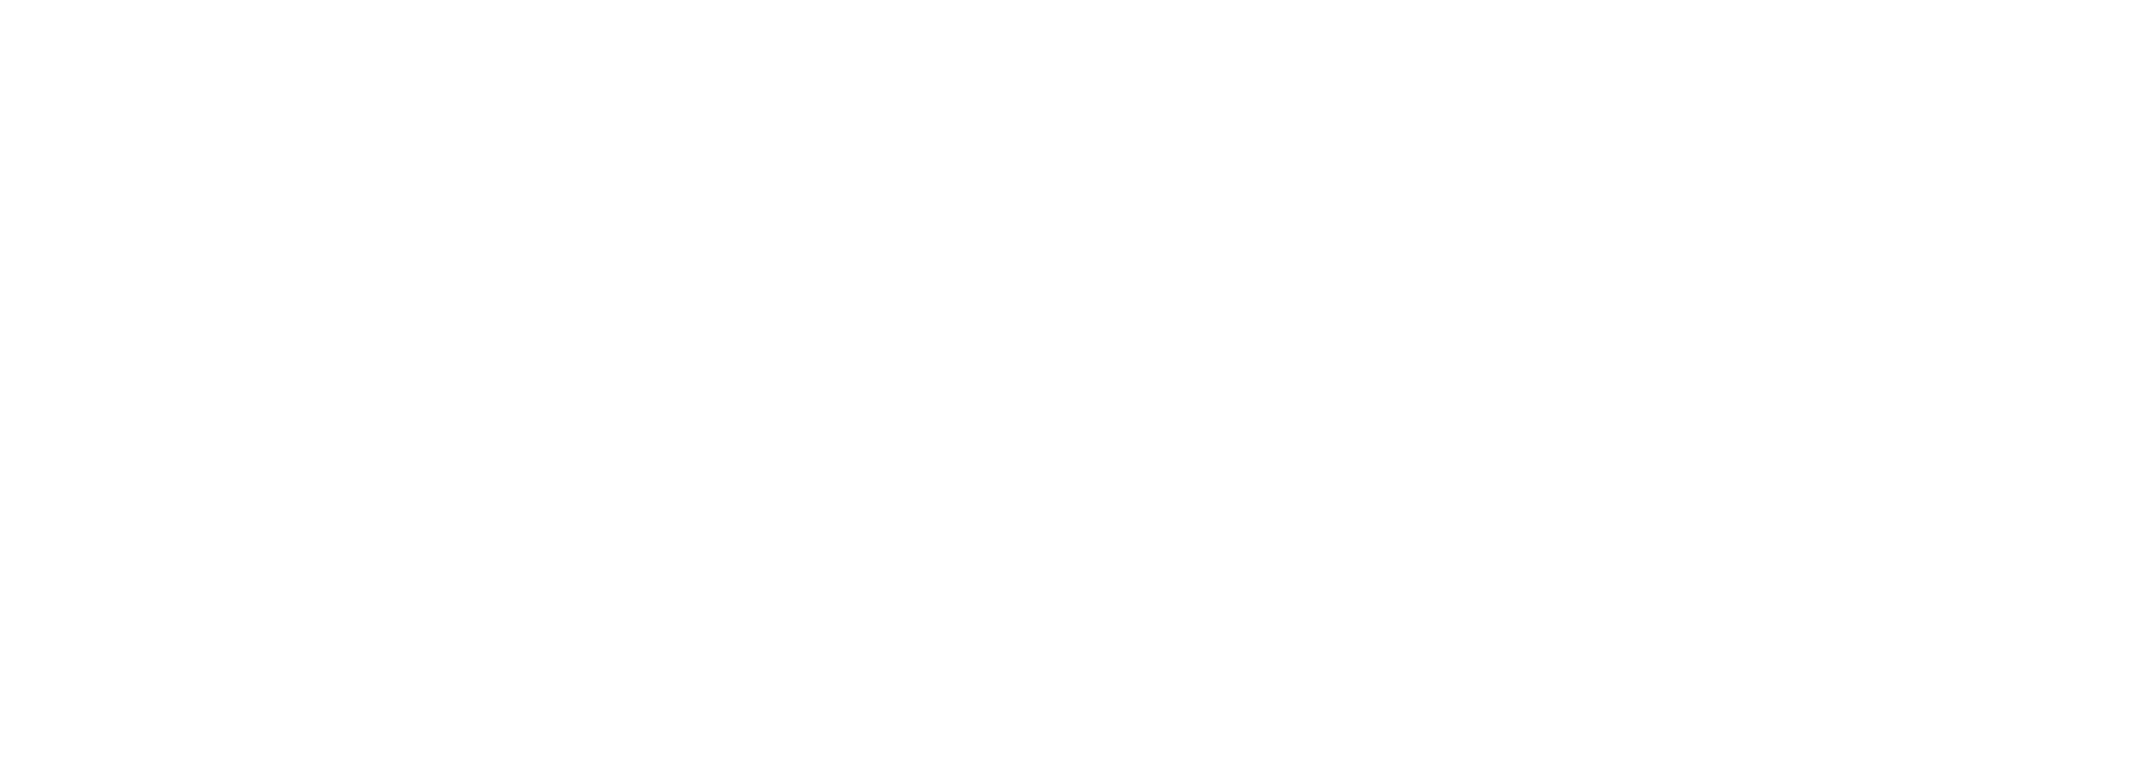 tect-trademarked-logo-white